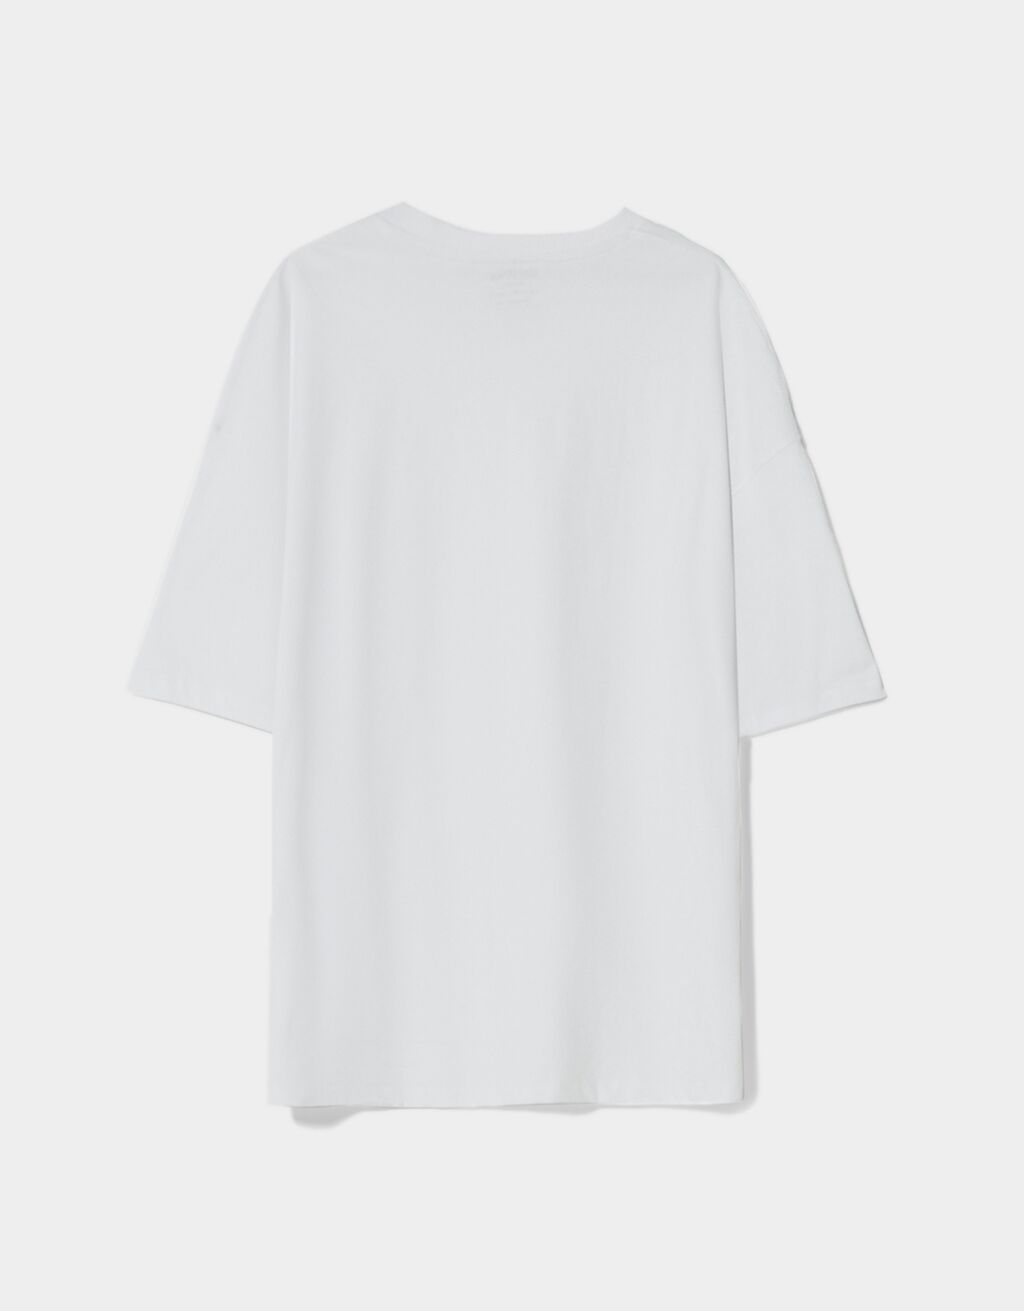 Men’s T-shirts | New Collection | Bershka